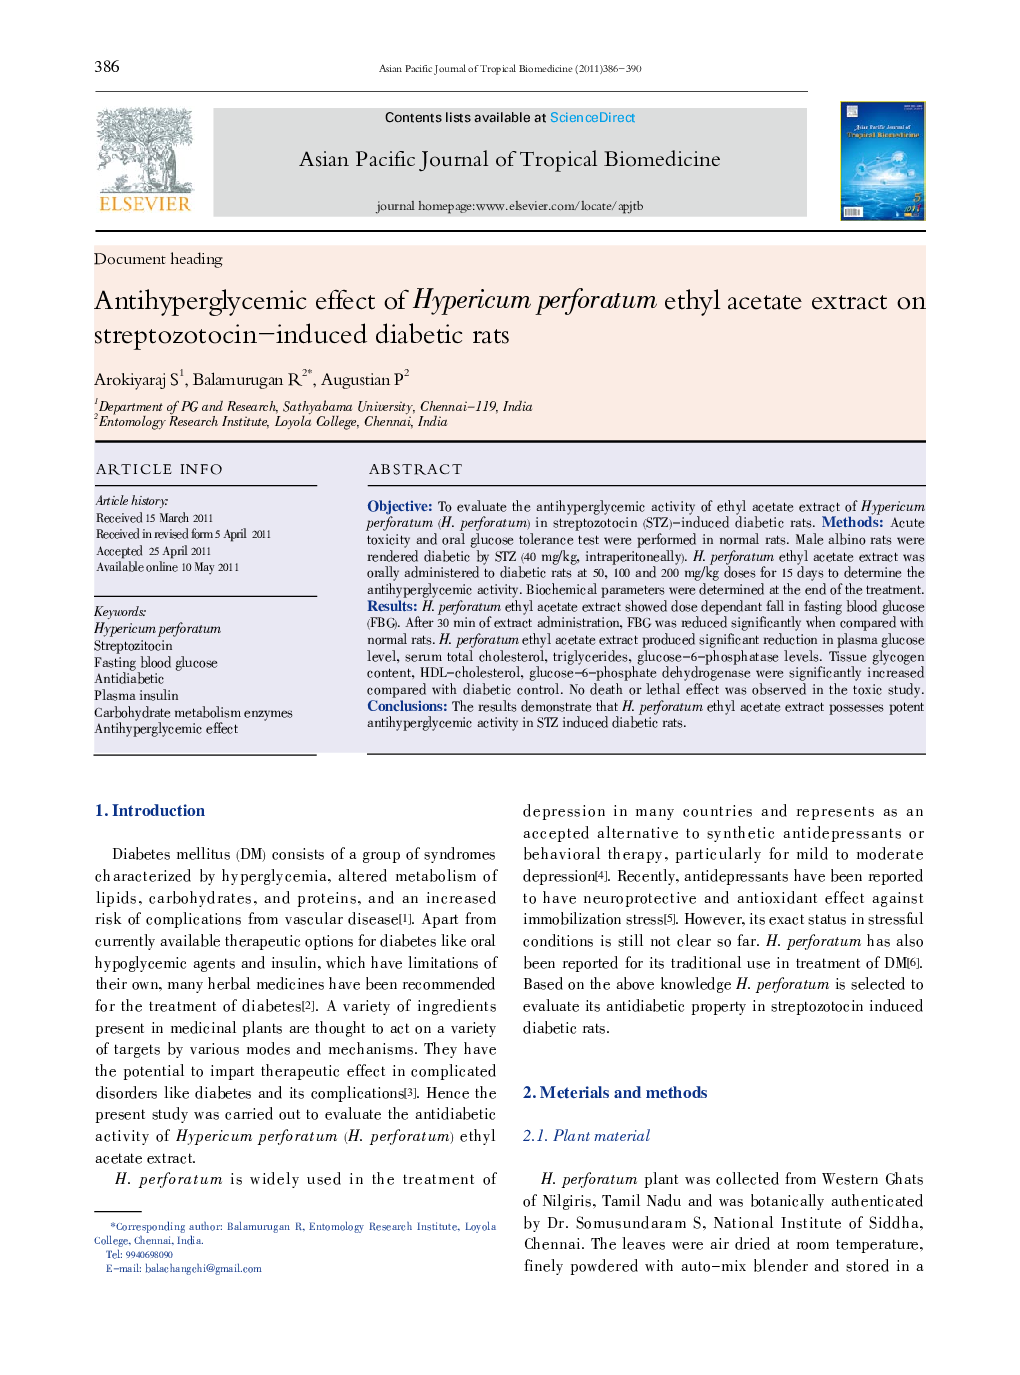 Antihyperglycemic effect of Hypericum perforatum ethyl acetate extract on streptozotocin-induced diabetic rats